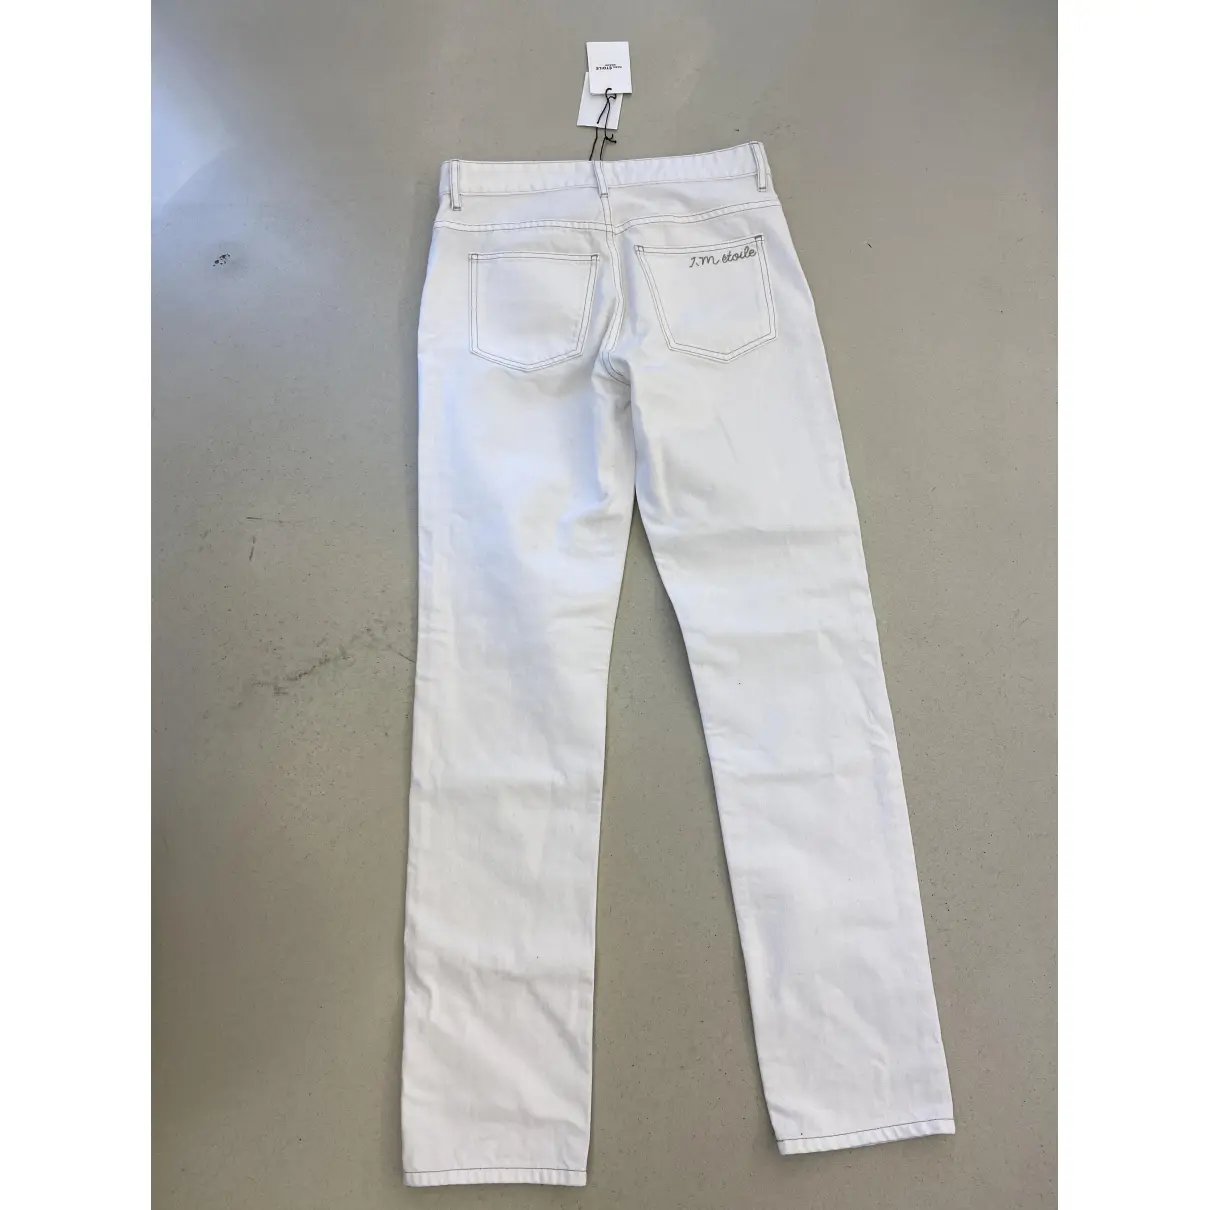 Buy Isabel Marant Etoile White Cotton Jeans online